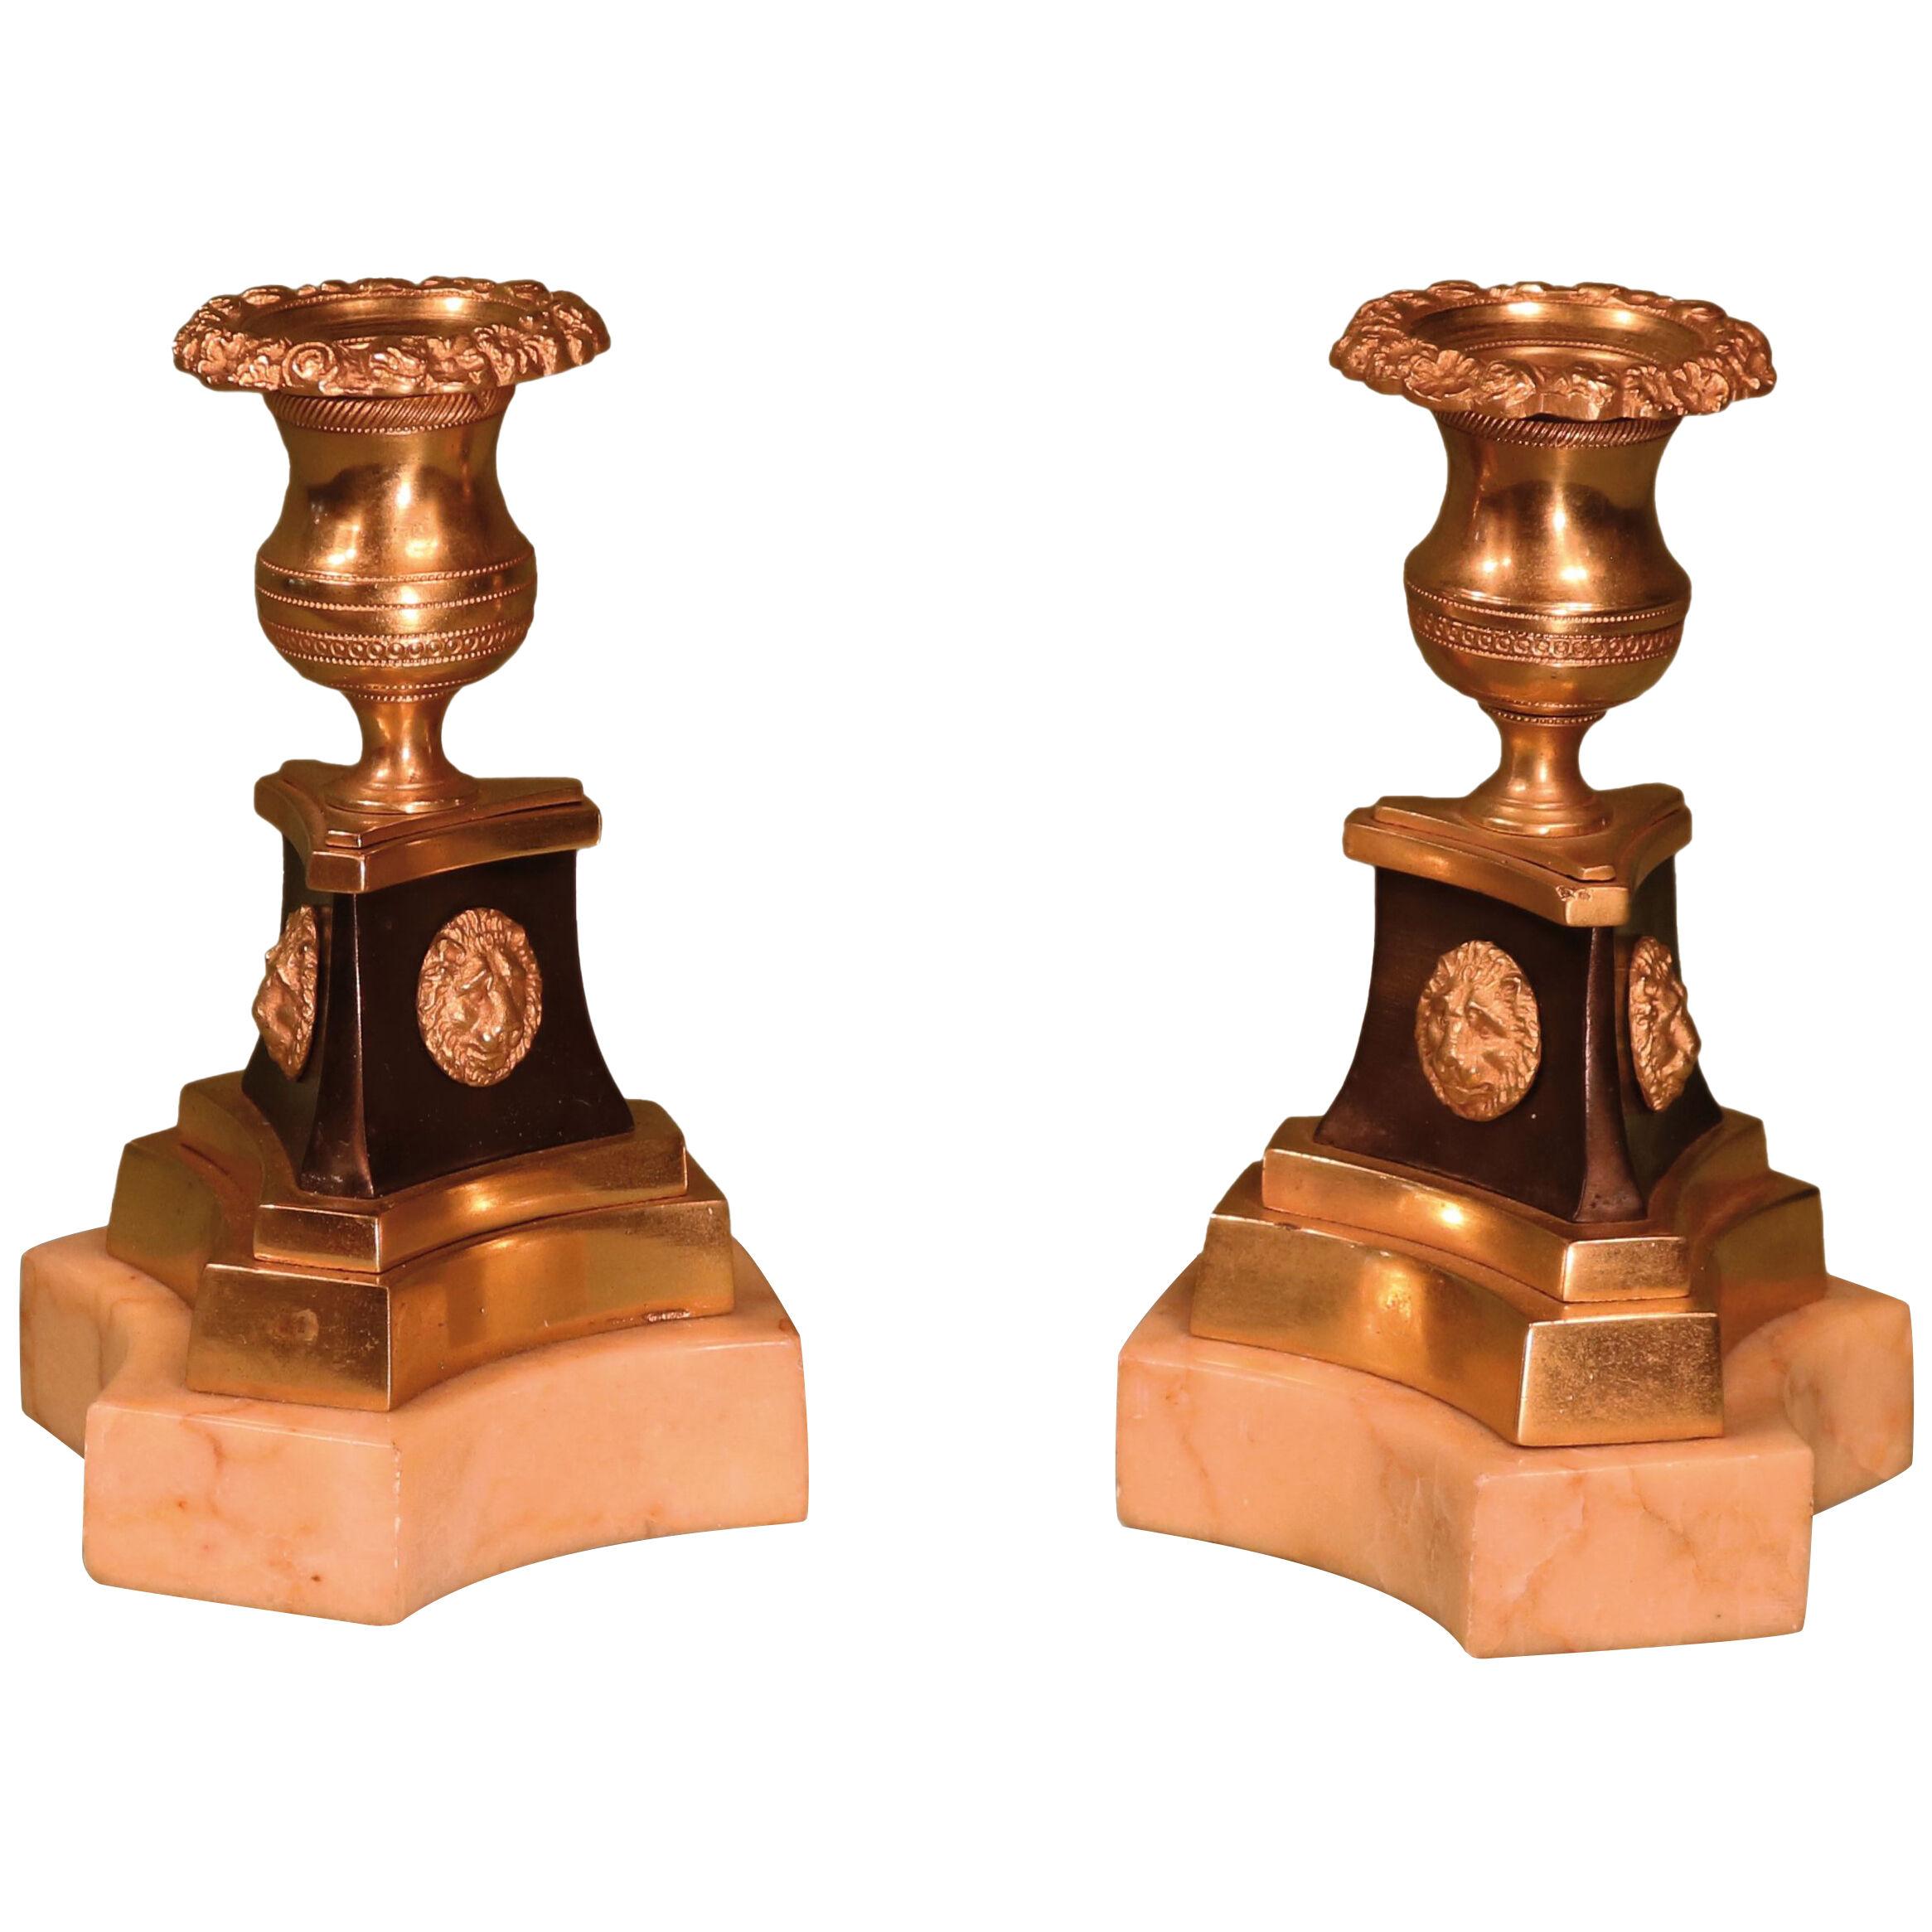 A pair of Regency period bronze and ormolu candlesticks